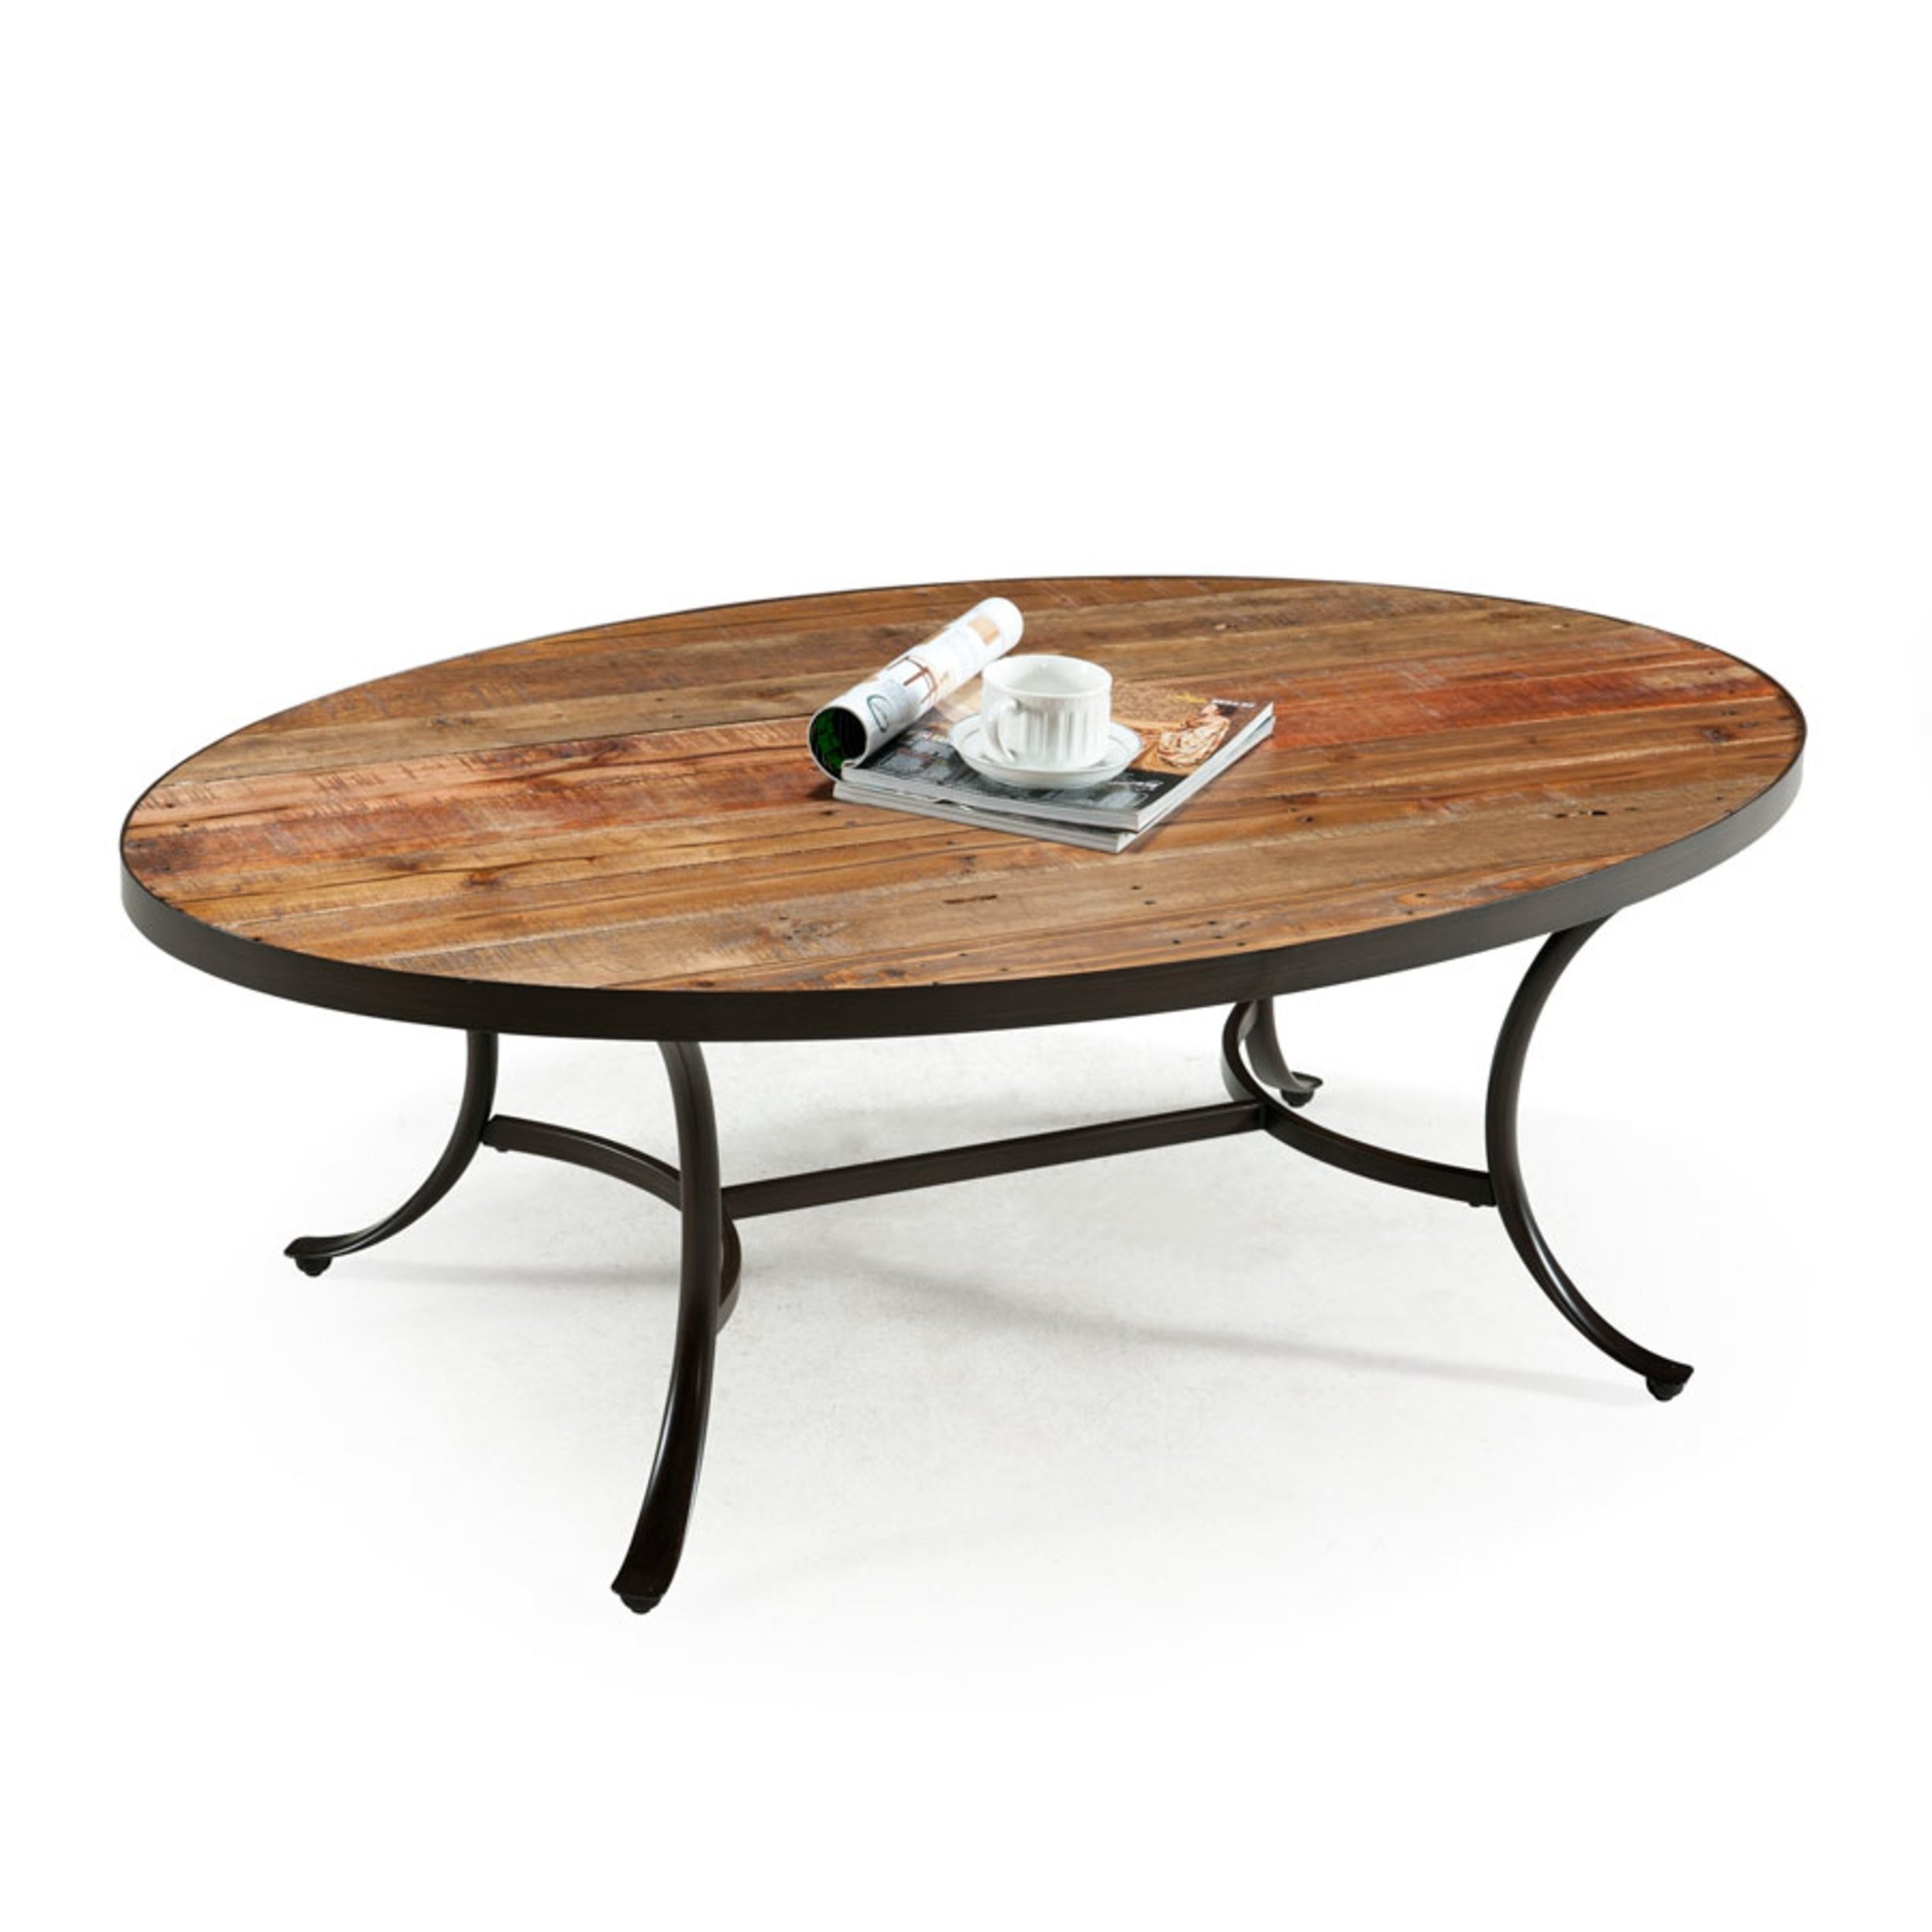 Iron wood coffee table